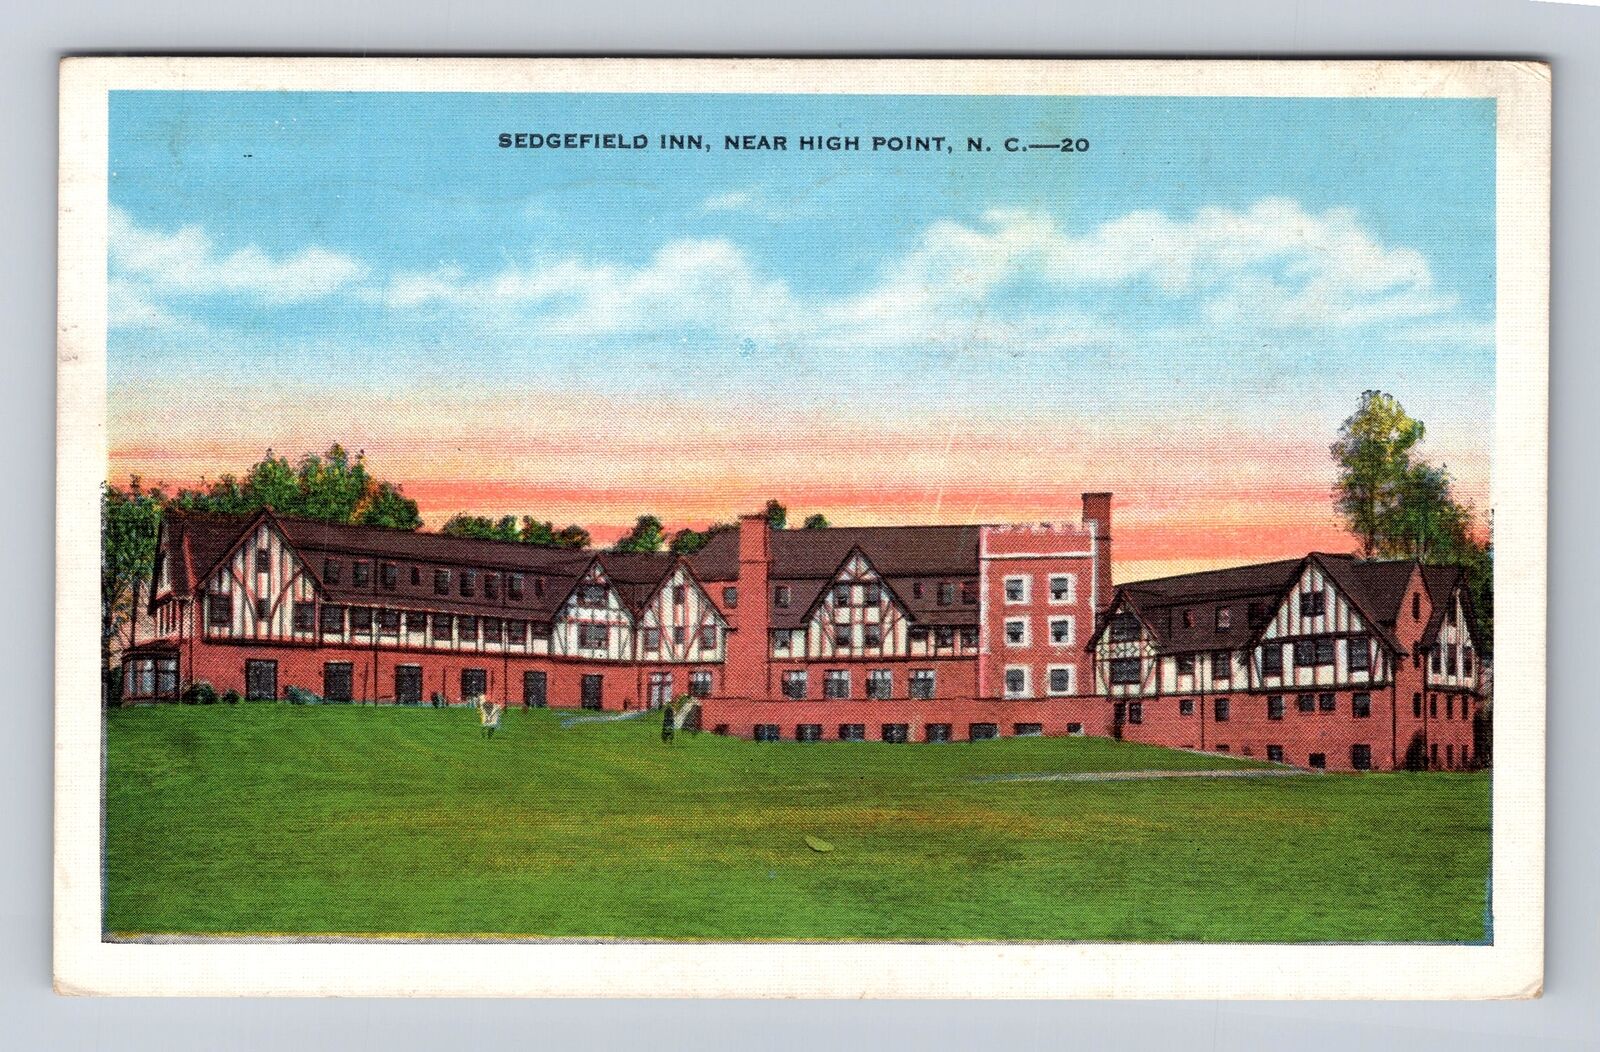 High Point NC-North Carolina Sedgefield Inn, Advertising, Vintage c1945 Postcard